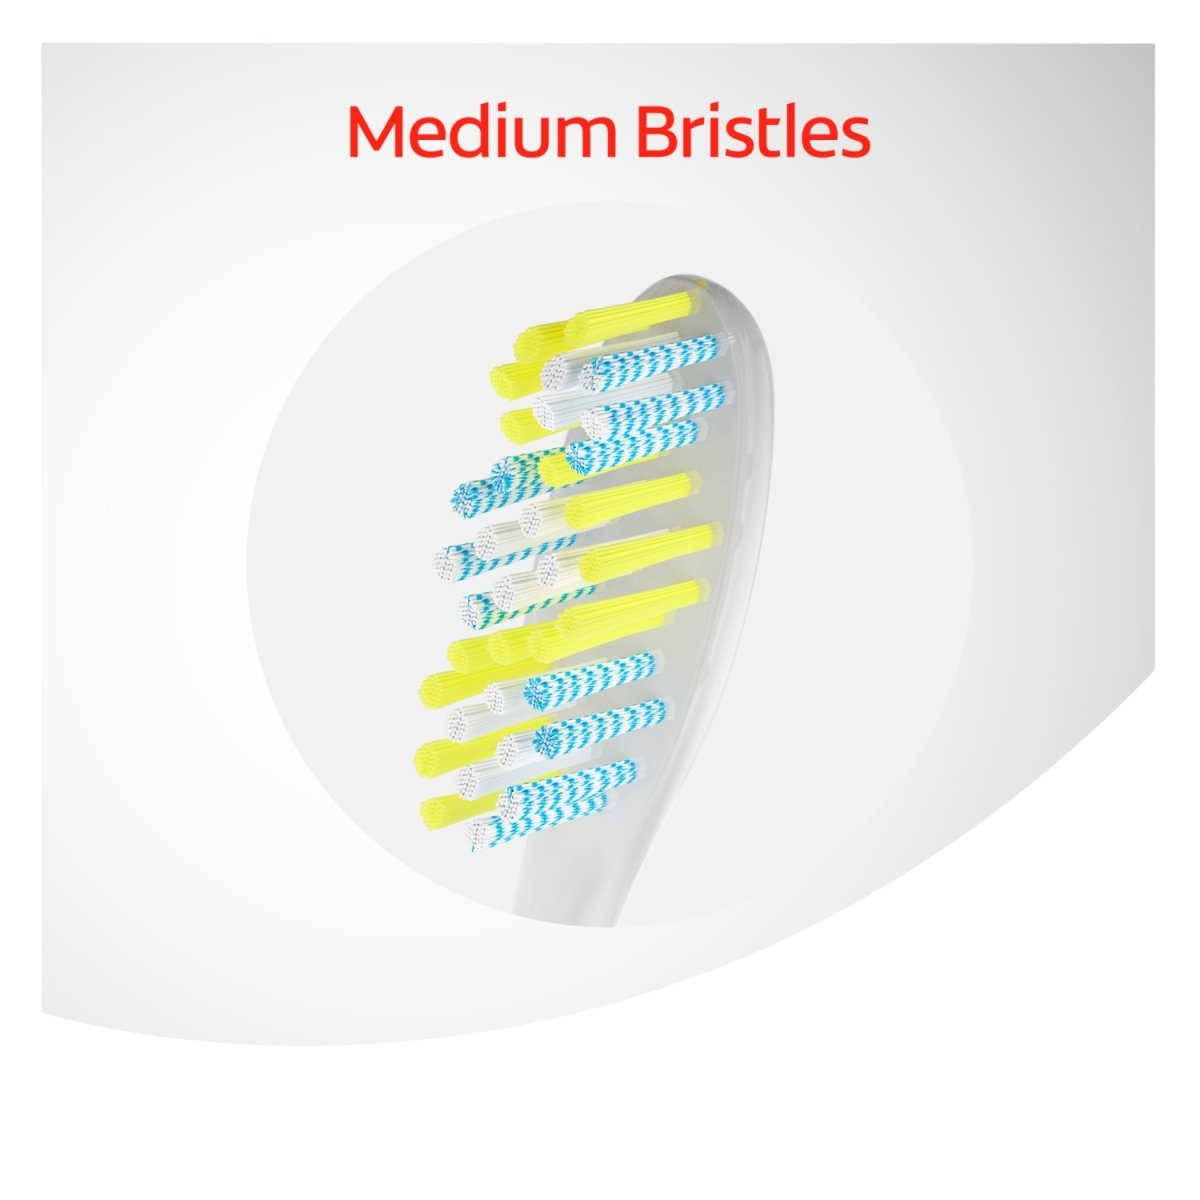 Colgate Toothbrush Twister Fresh - Intamarque 5000209216511